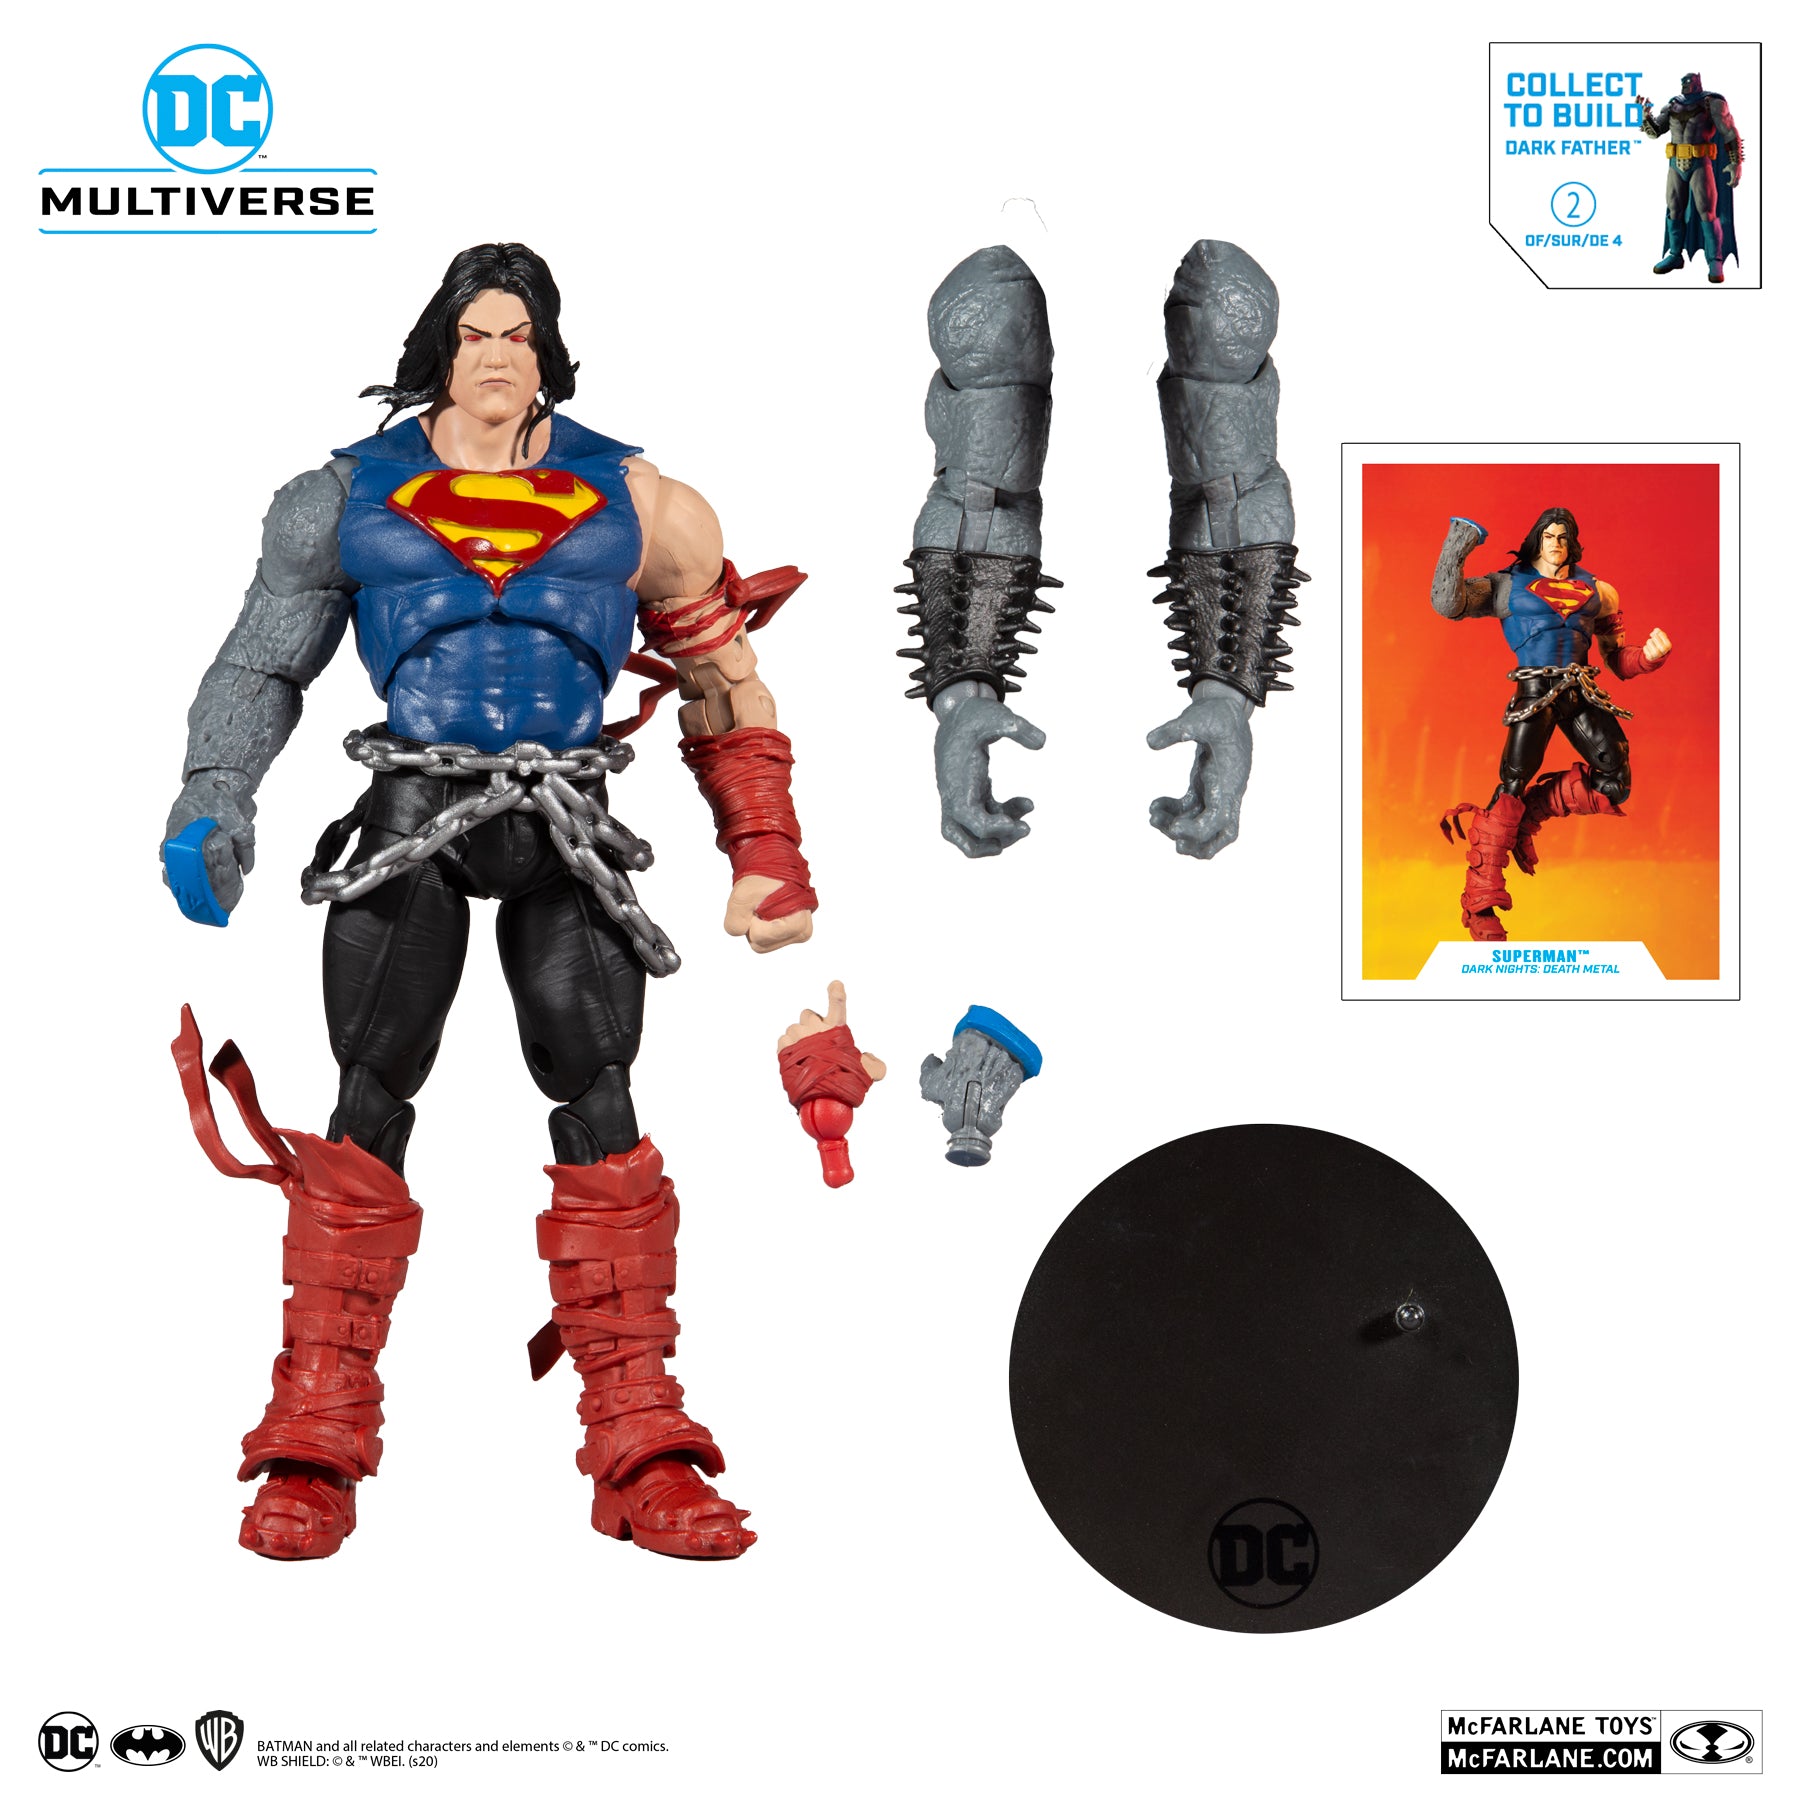 DC Multiverse Death Metal Superman Build-a Darkfather - McFarlane Toys